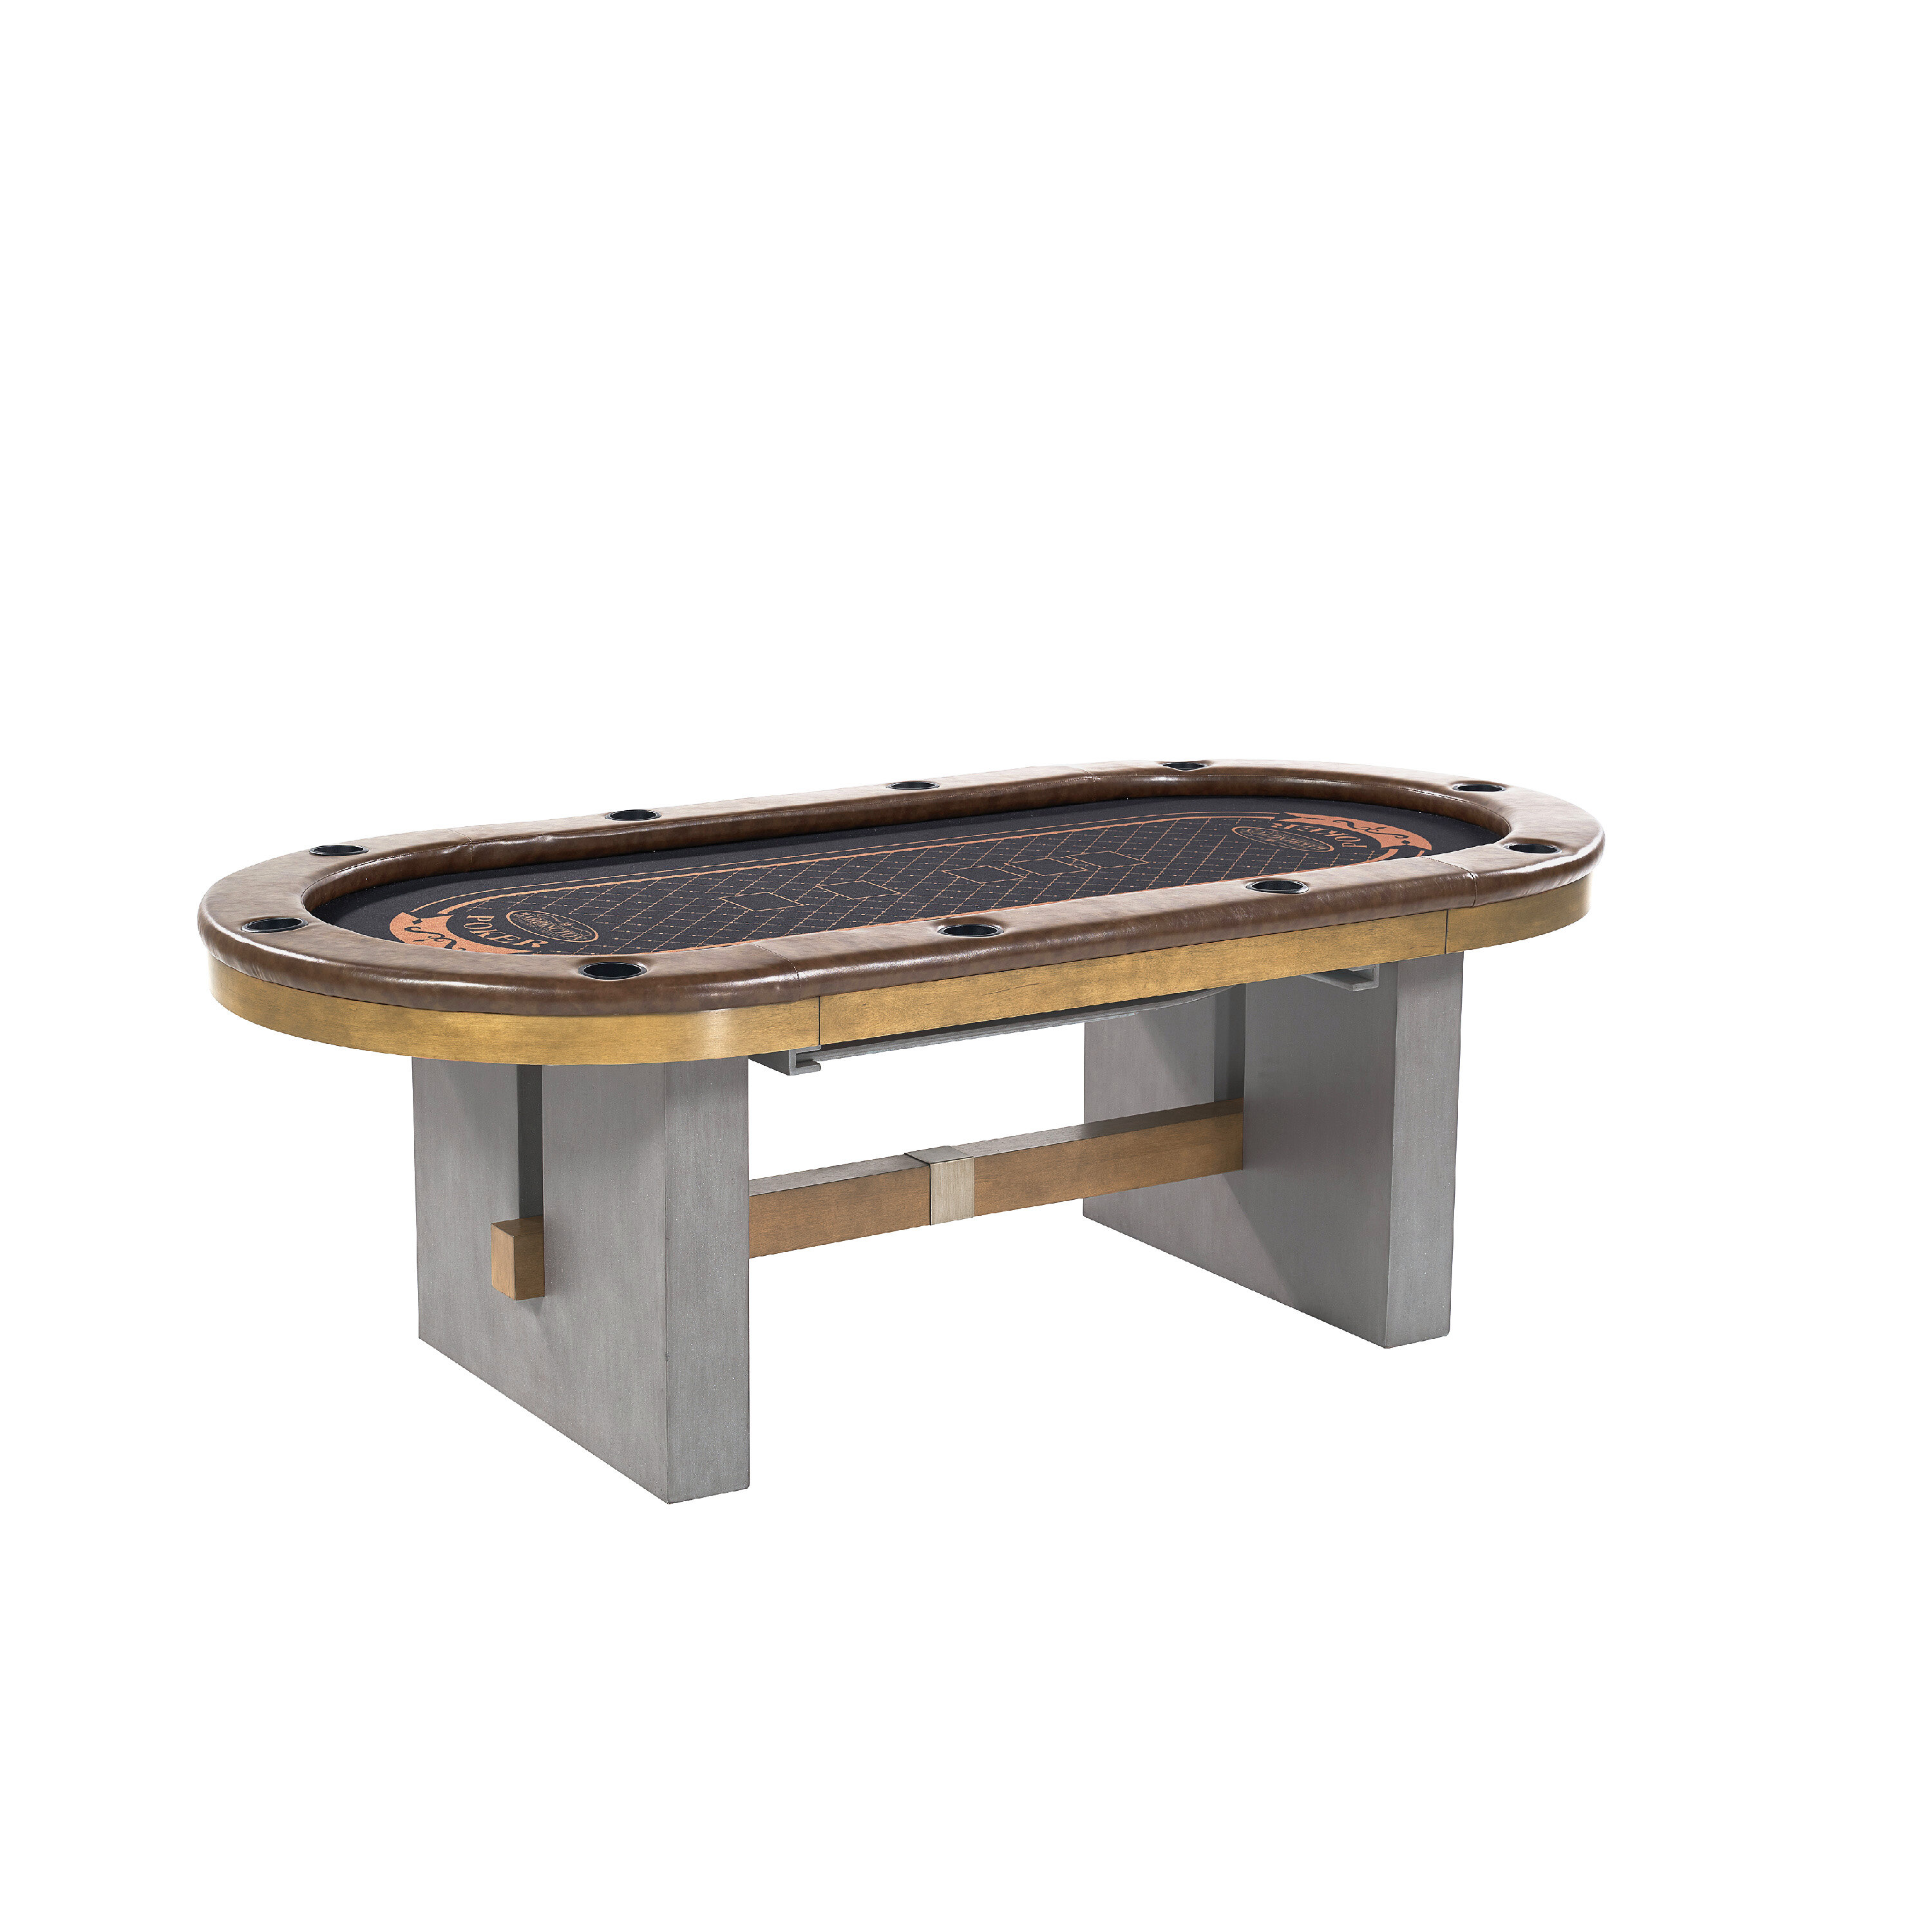 Barrington 10-Player Poker Table Home Game Tournament Foldable Casino BRAND NEW 